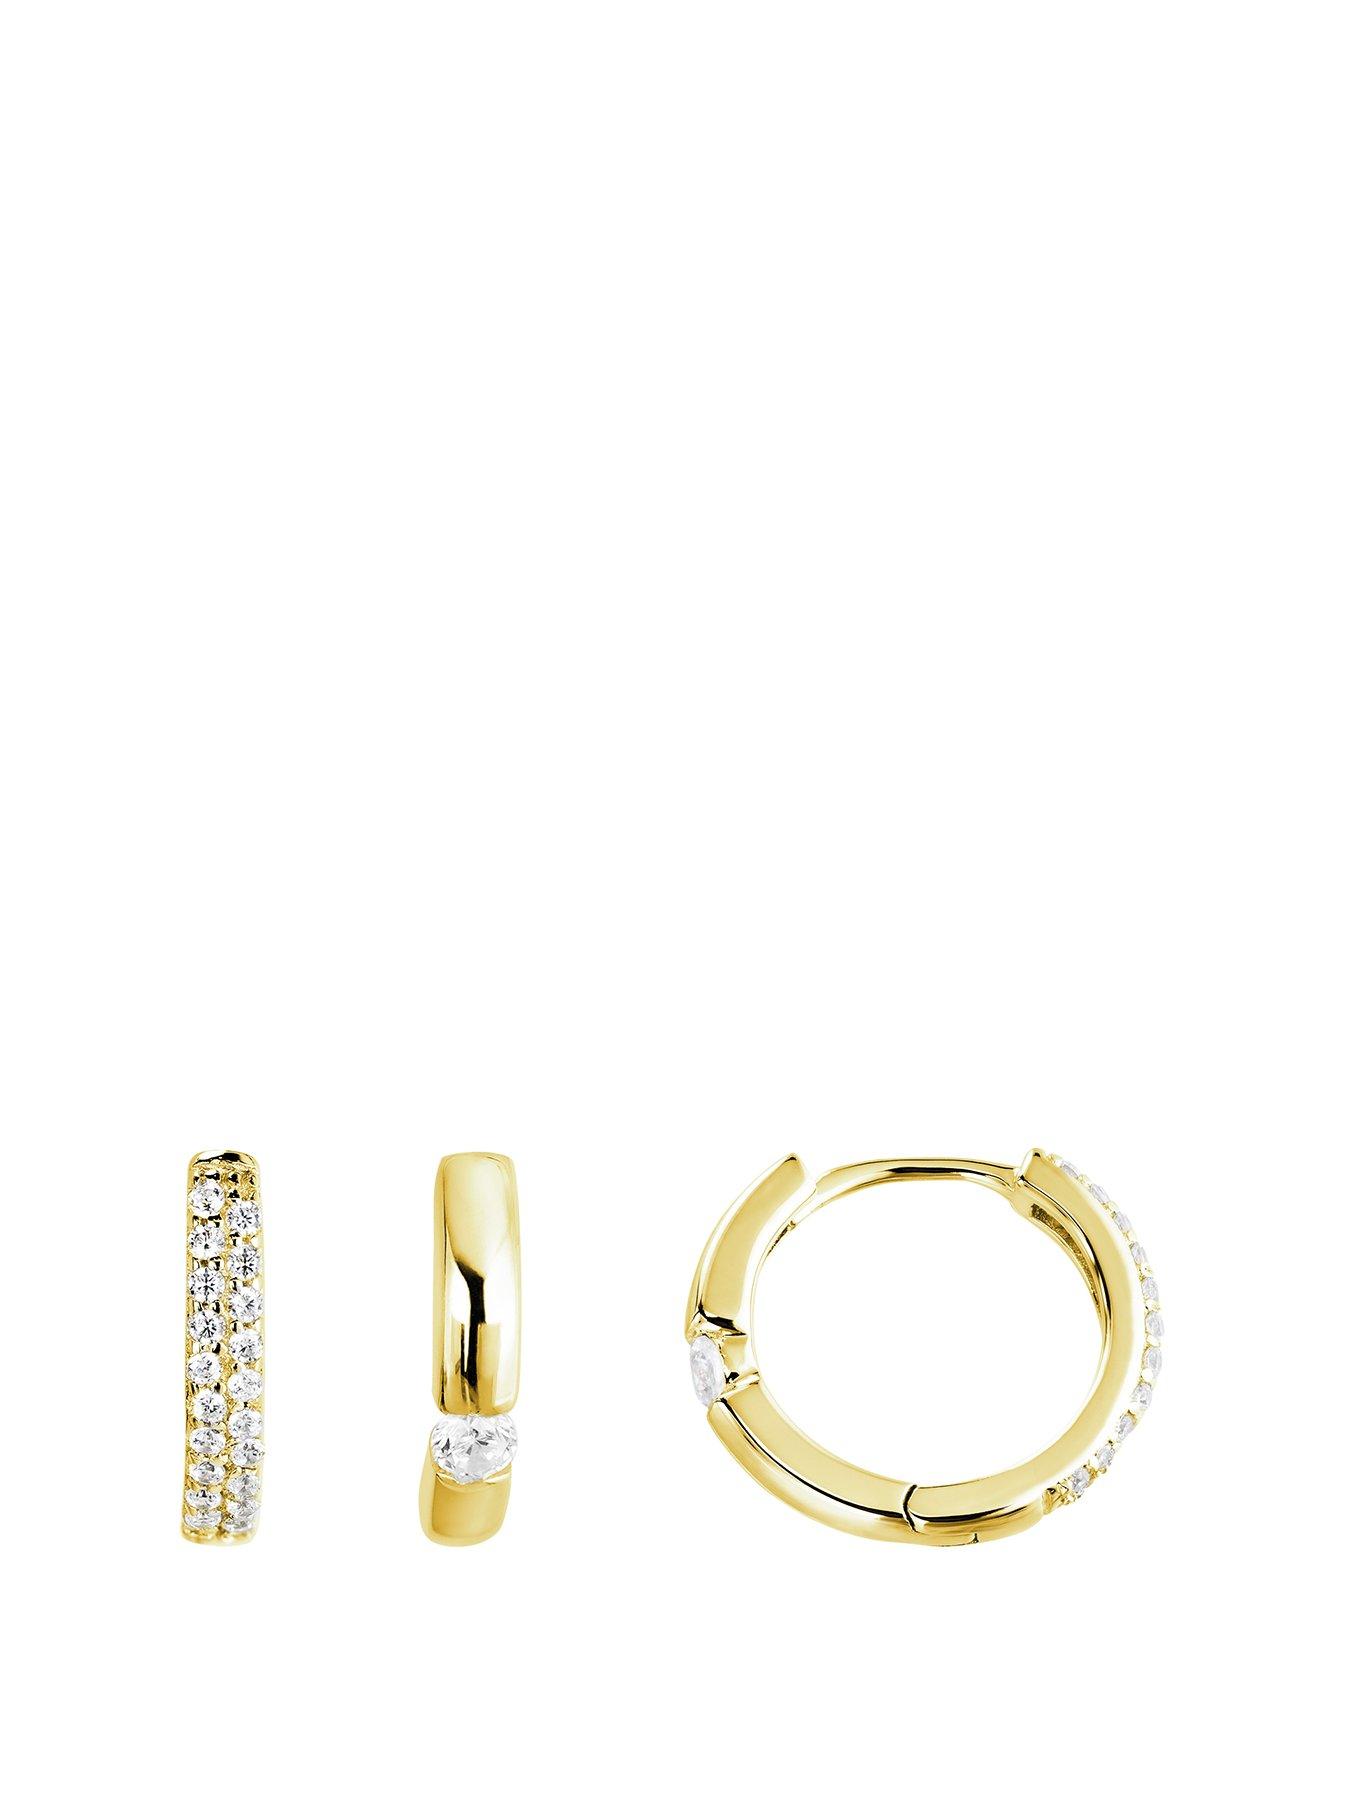 Details about   14k Solid Yellow Gold High Polished Shiny Slip On 1.5mm Tube Bangle Bracelet 7"L 